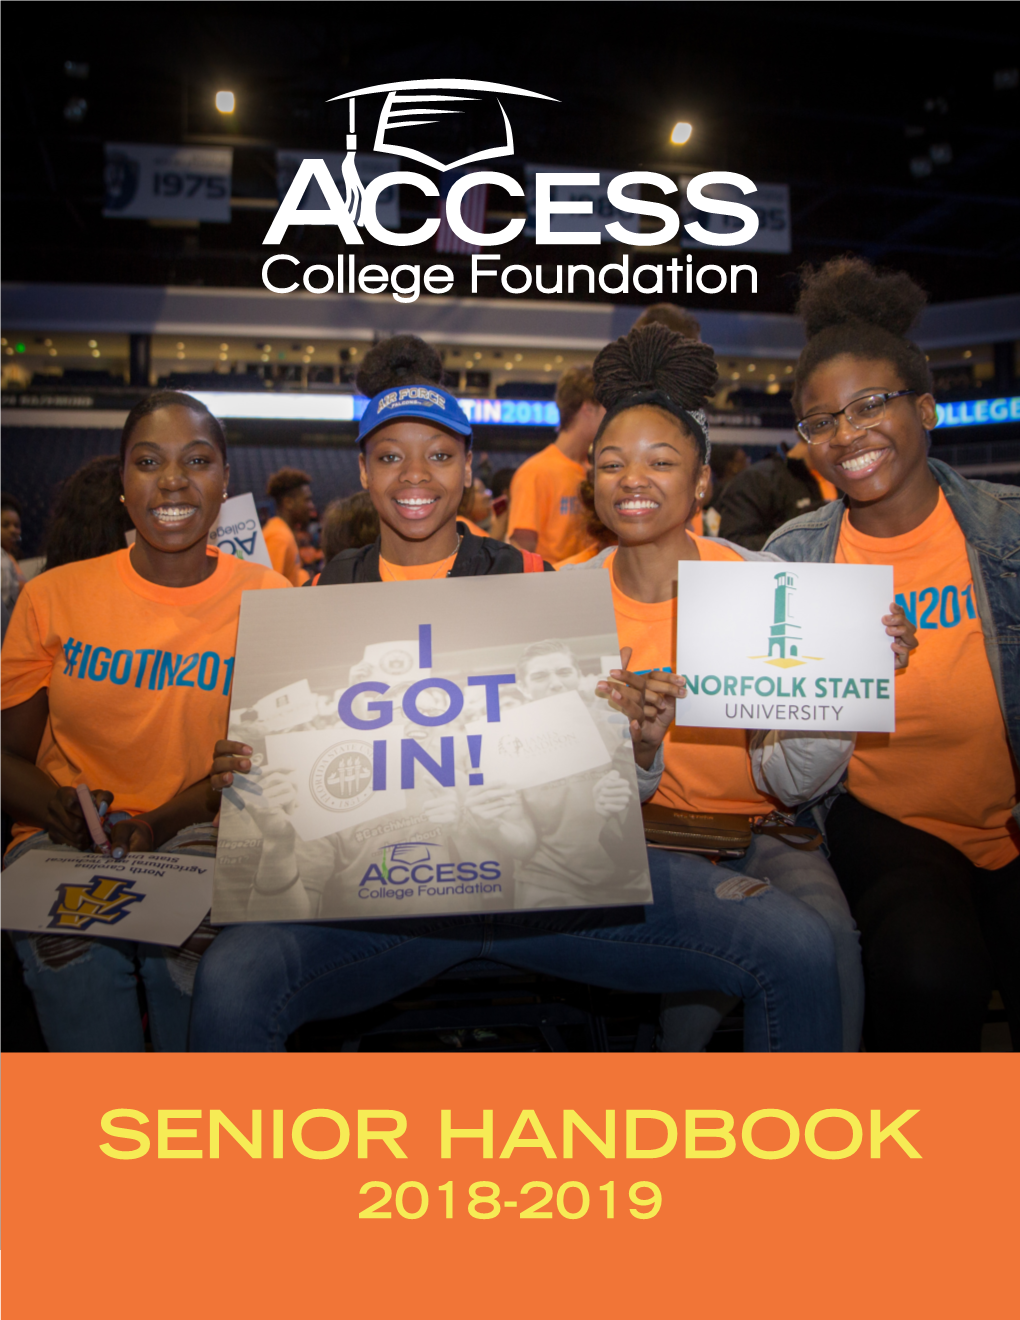 Senior Handbook 2018-2019 the Access College Foundation Senior Handbook